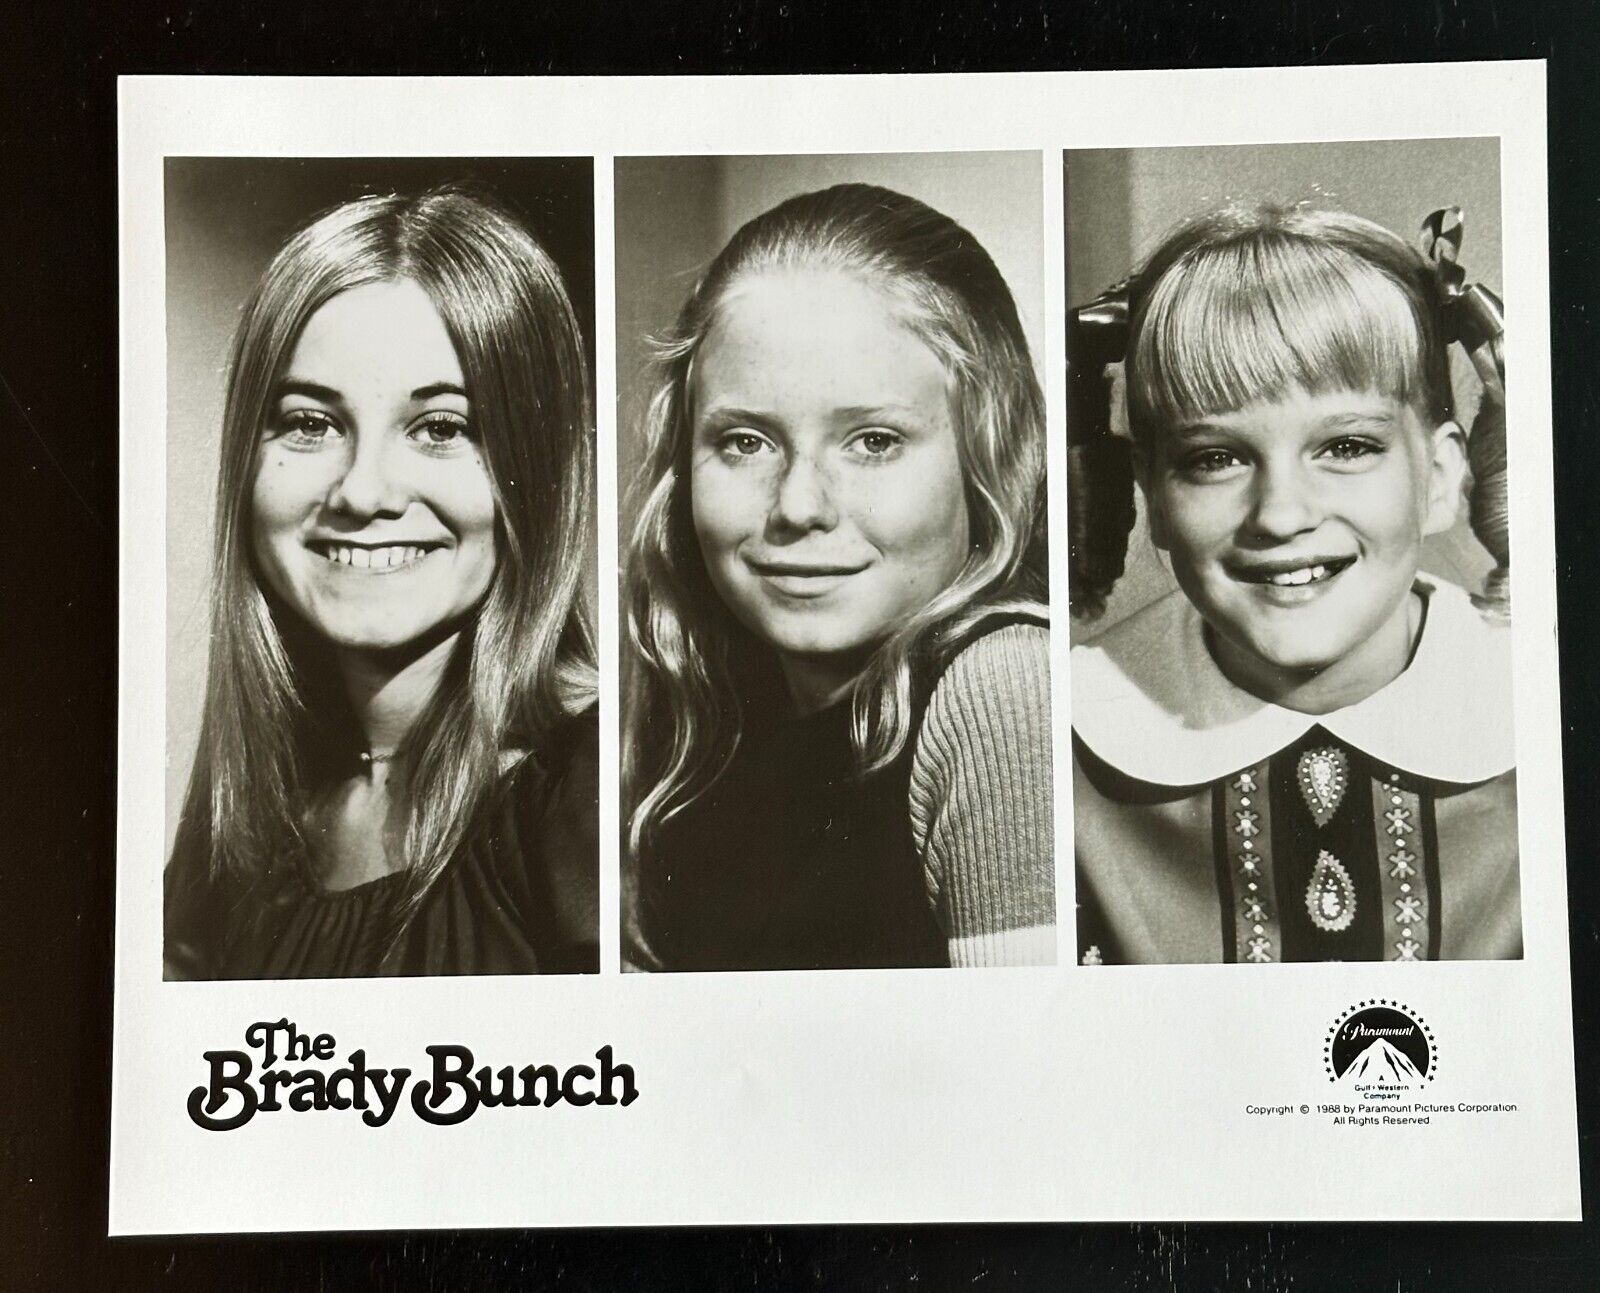 The Brady Bunch Black & White 8x10 Photos (3) with Paramount logo